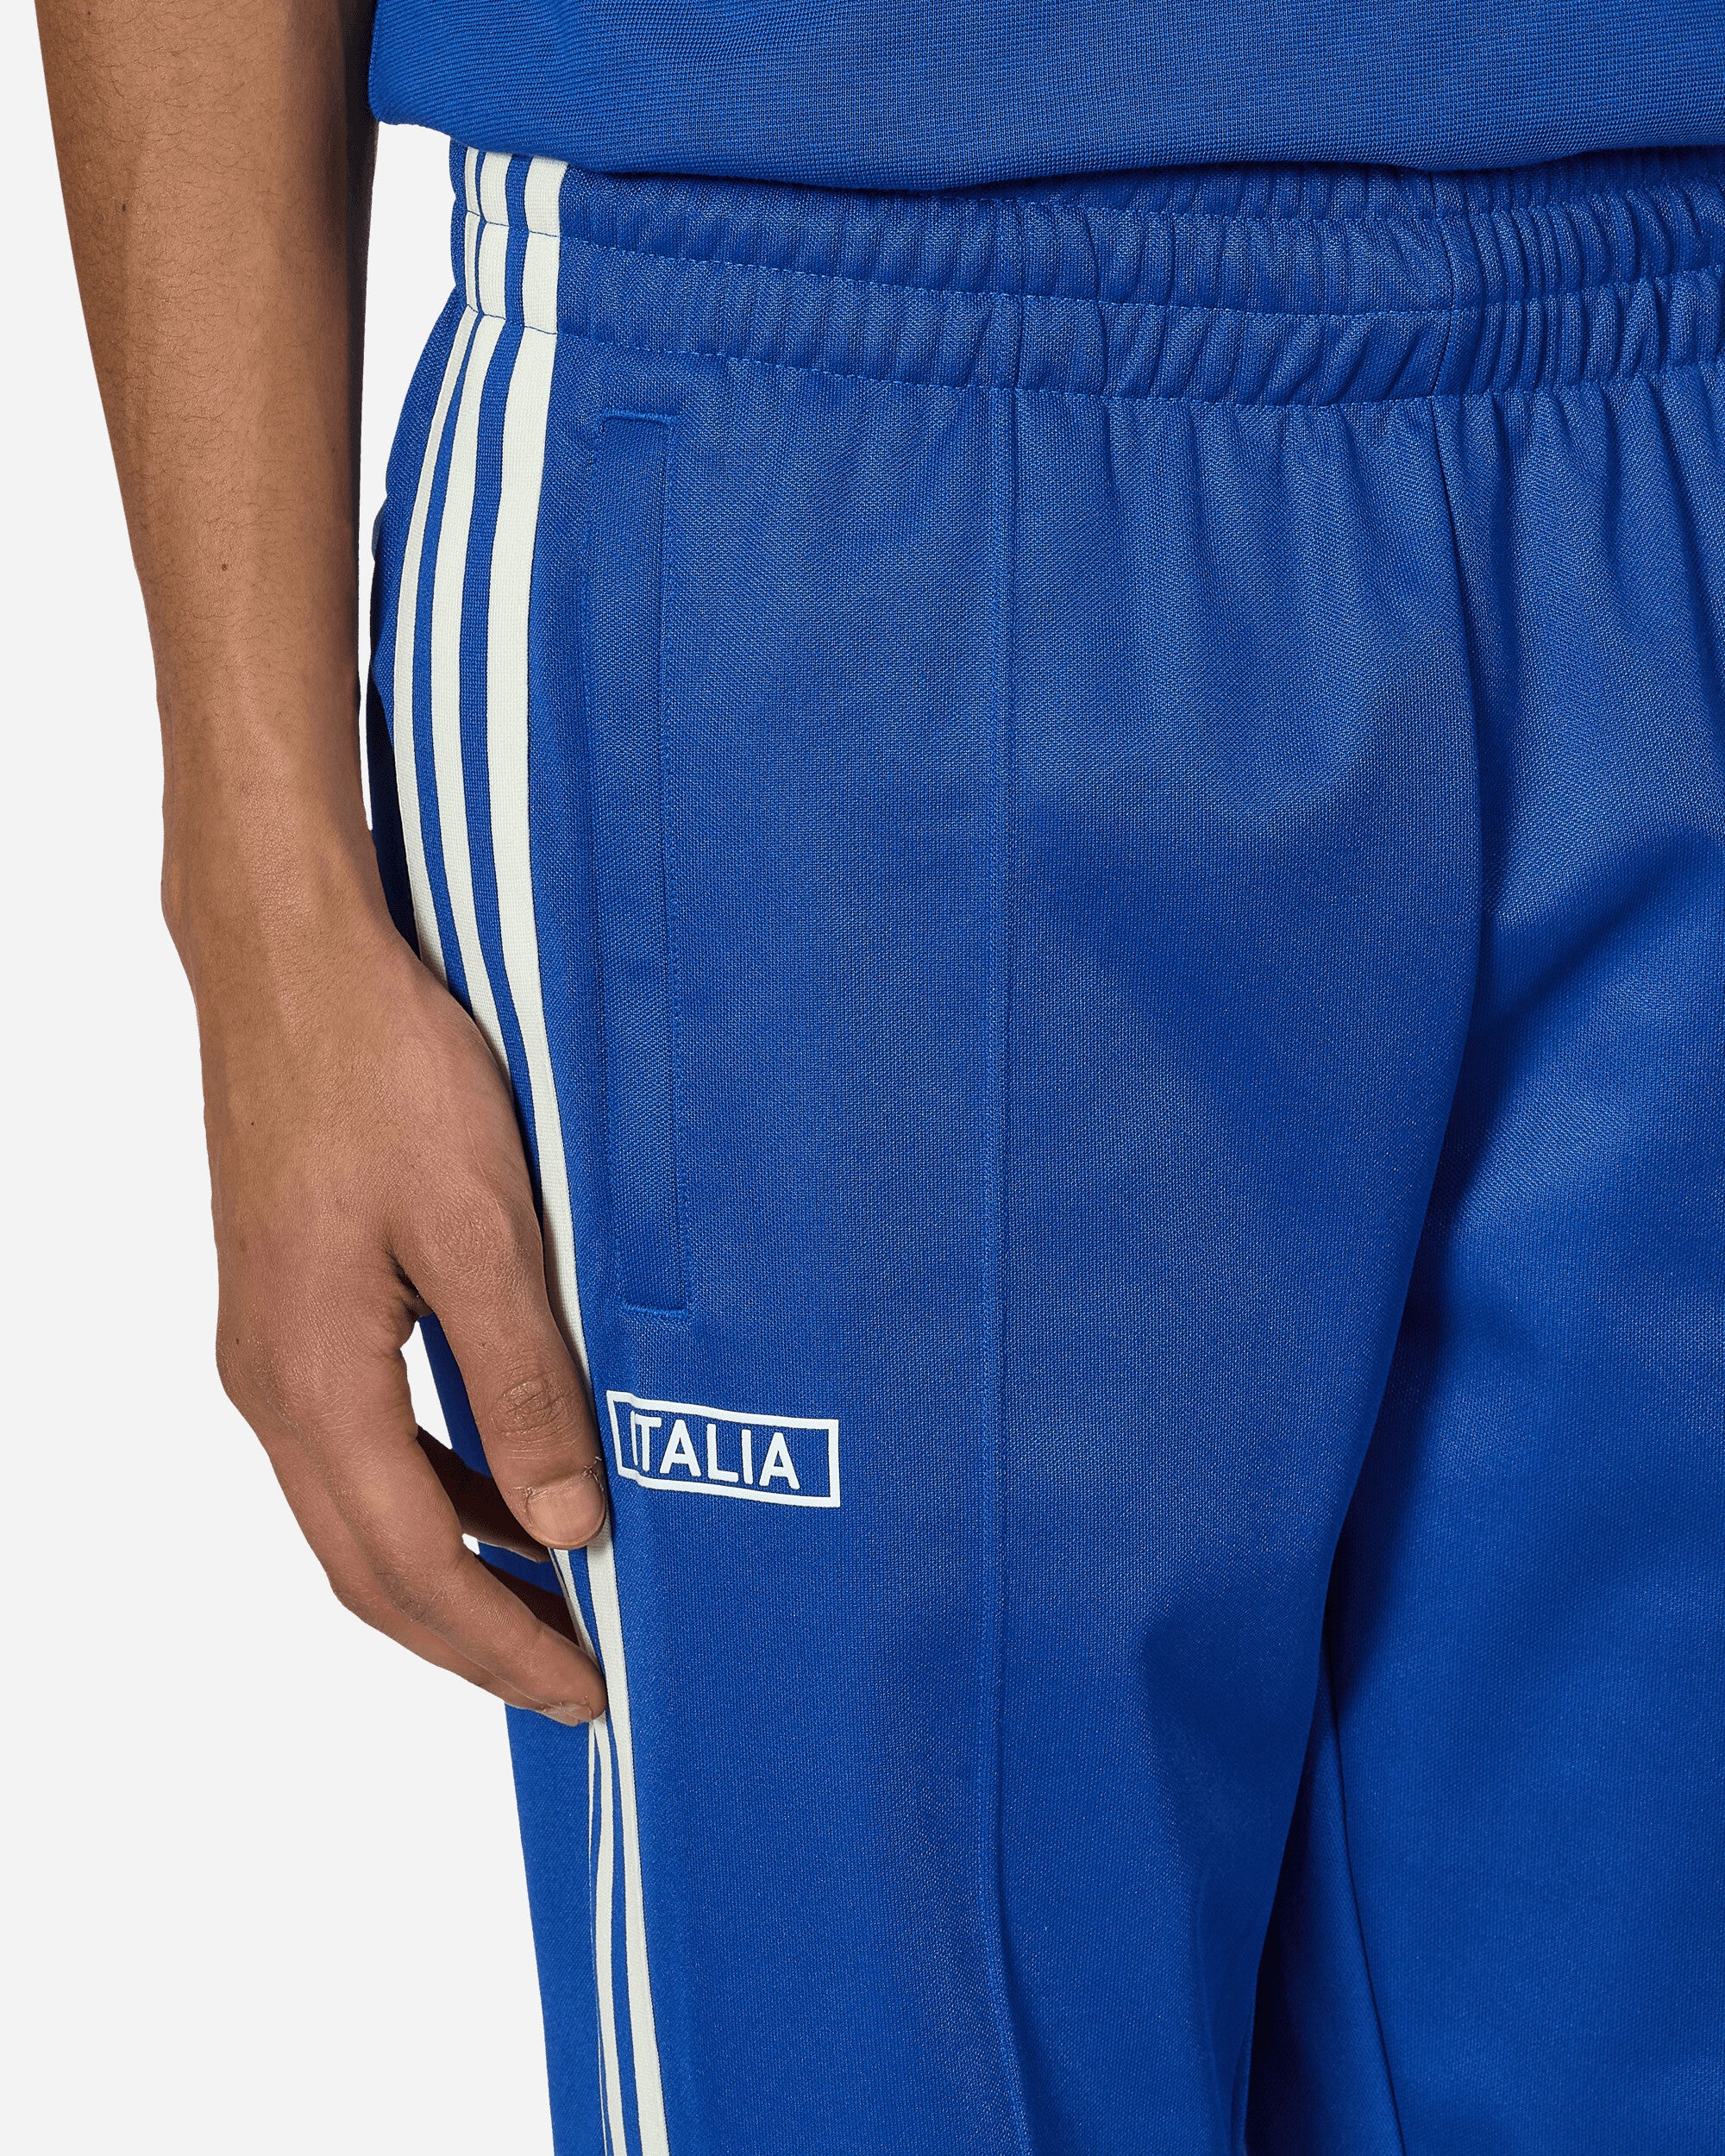 adidas Figc Og Bb Tp Team Royal Blue Pants Track Pants IU2121 001